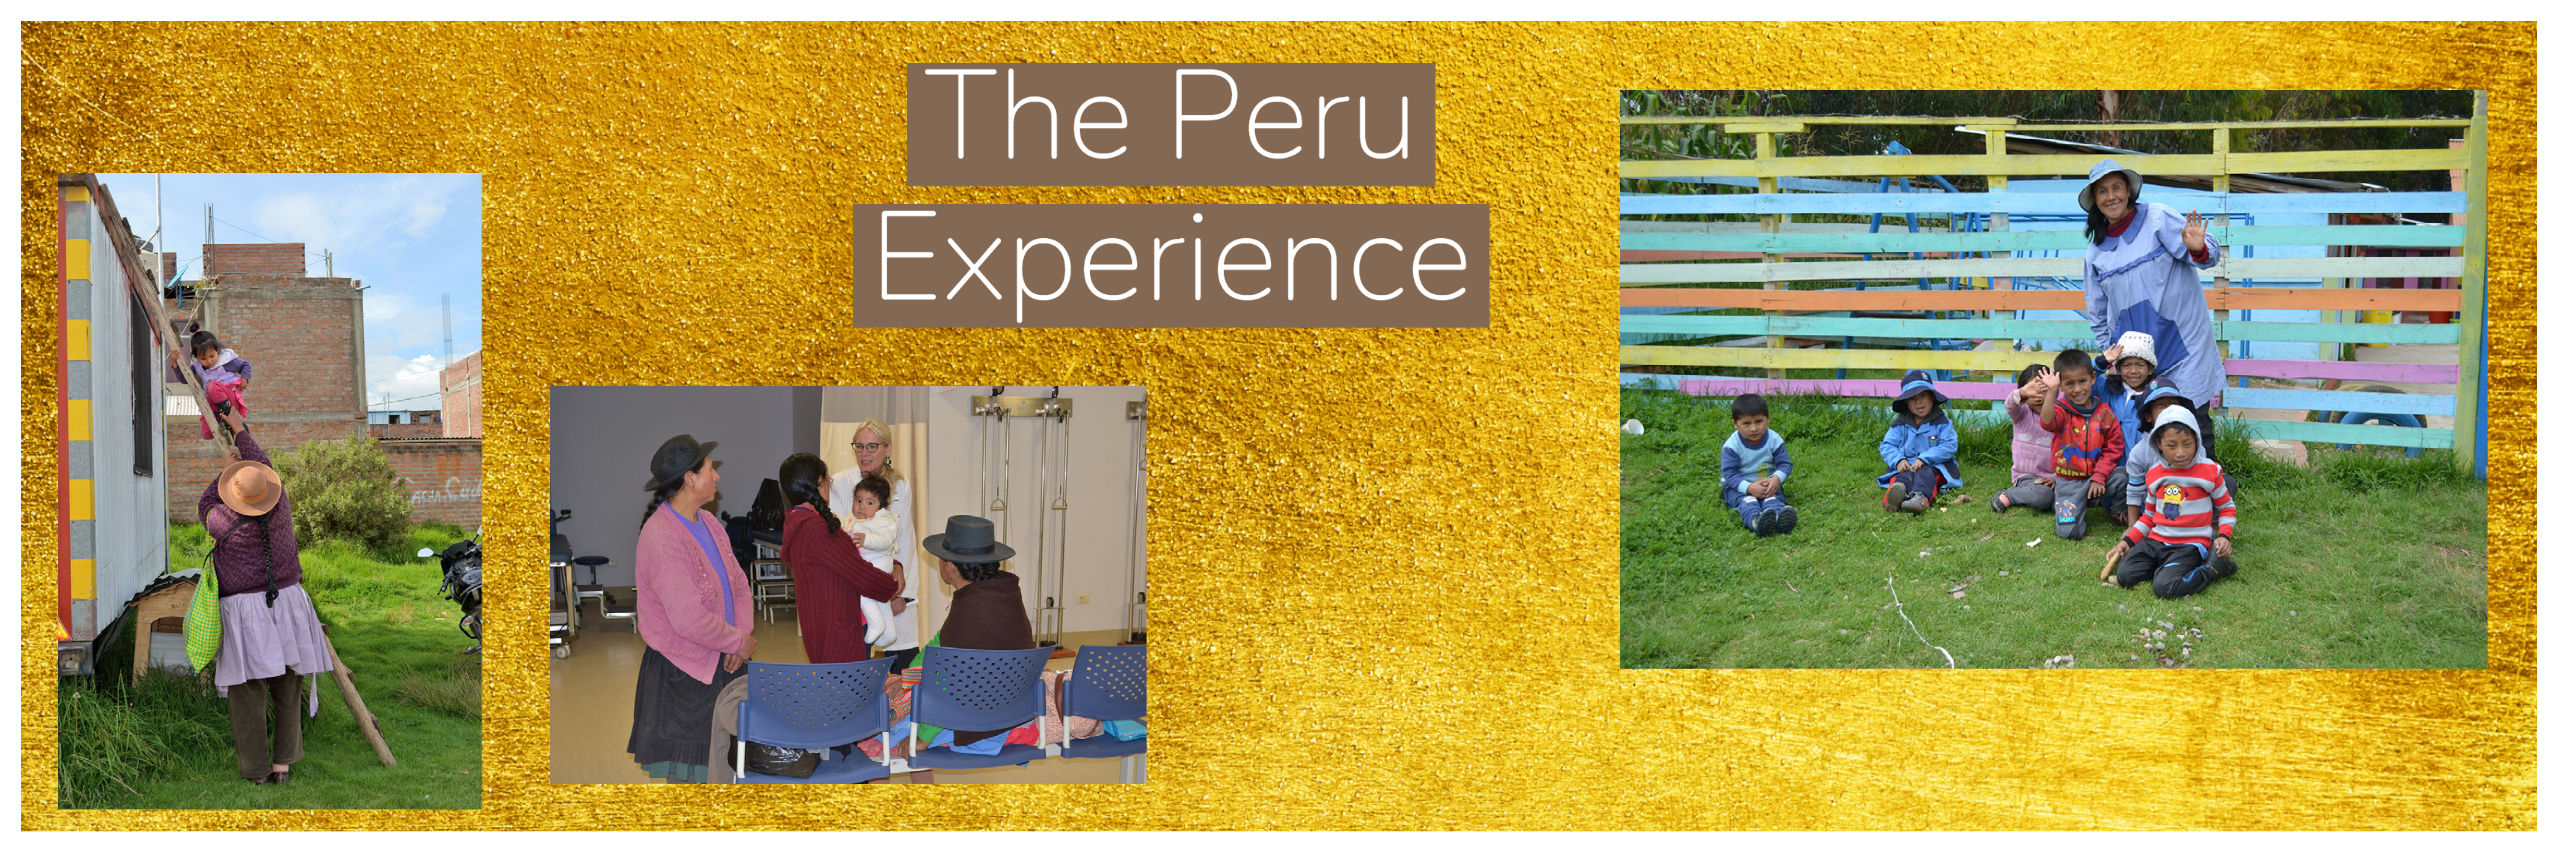 The Peru Experience